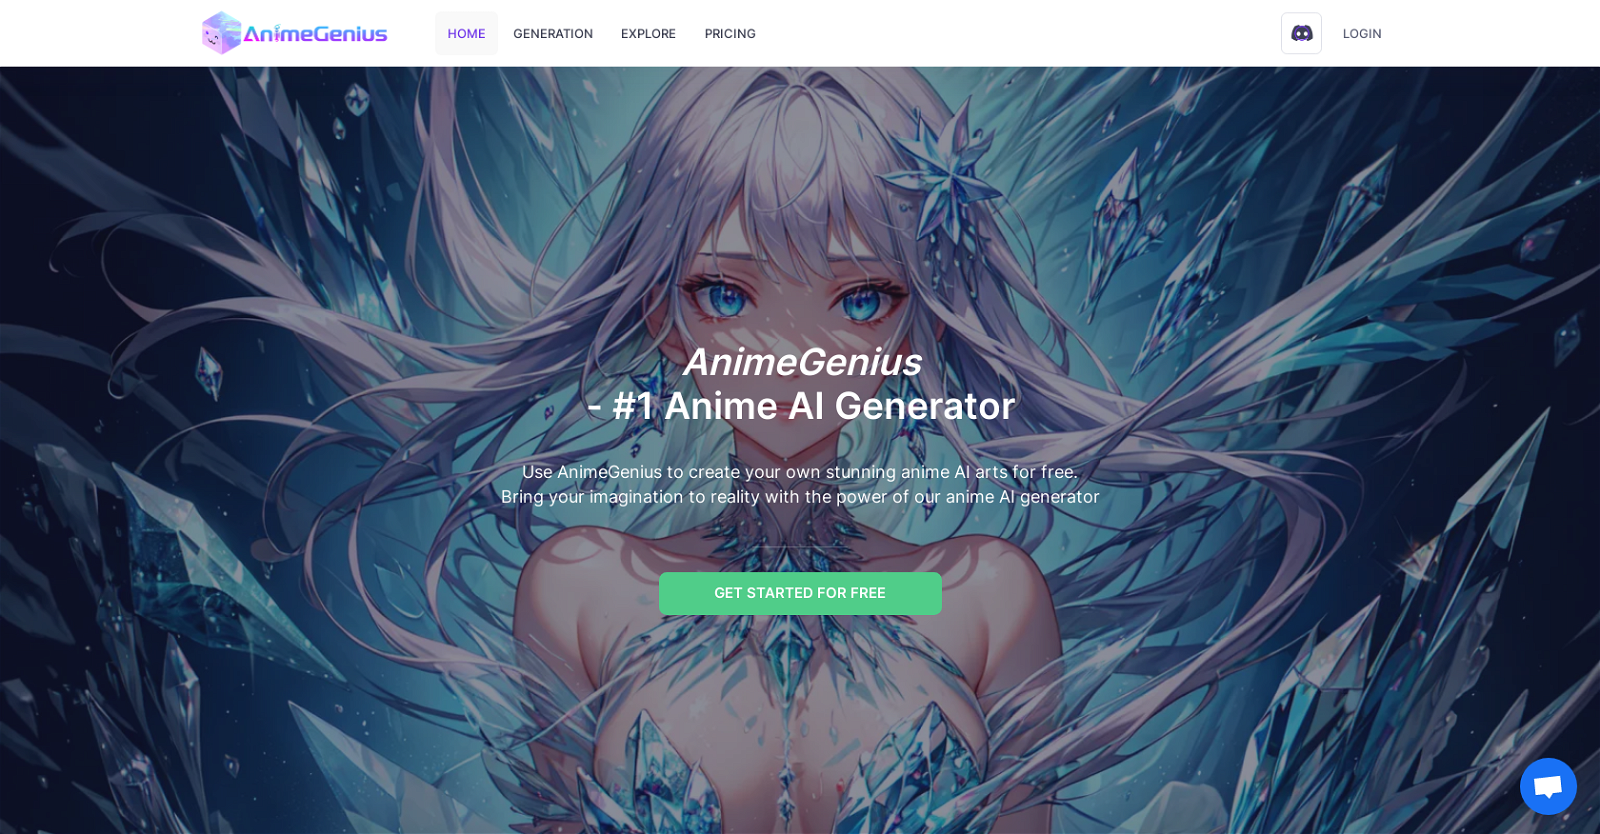 100% Fun Anime Name Generator. What Is Your Anime Name?